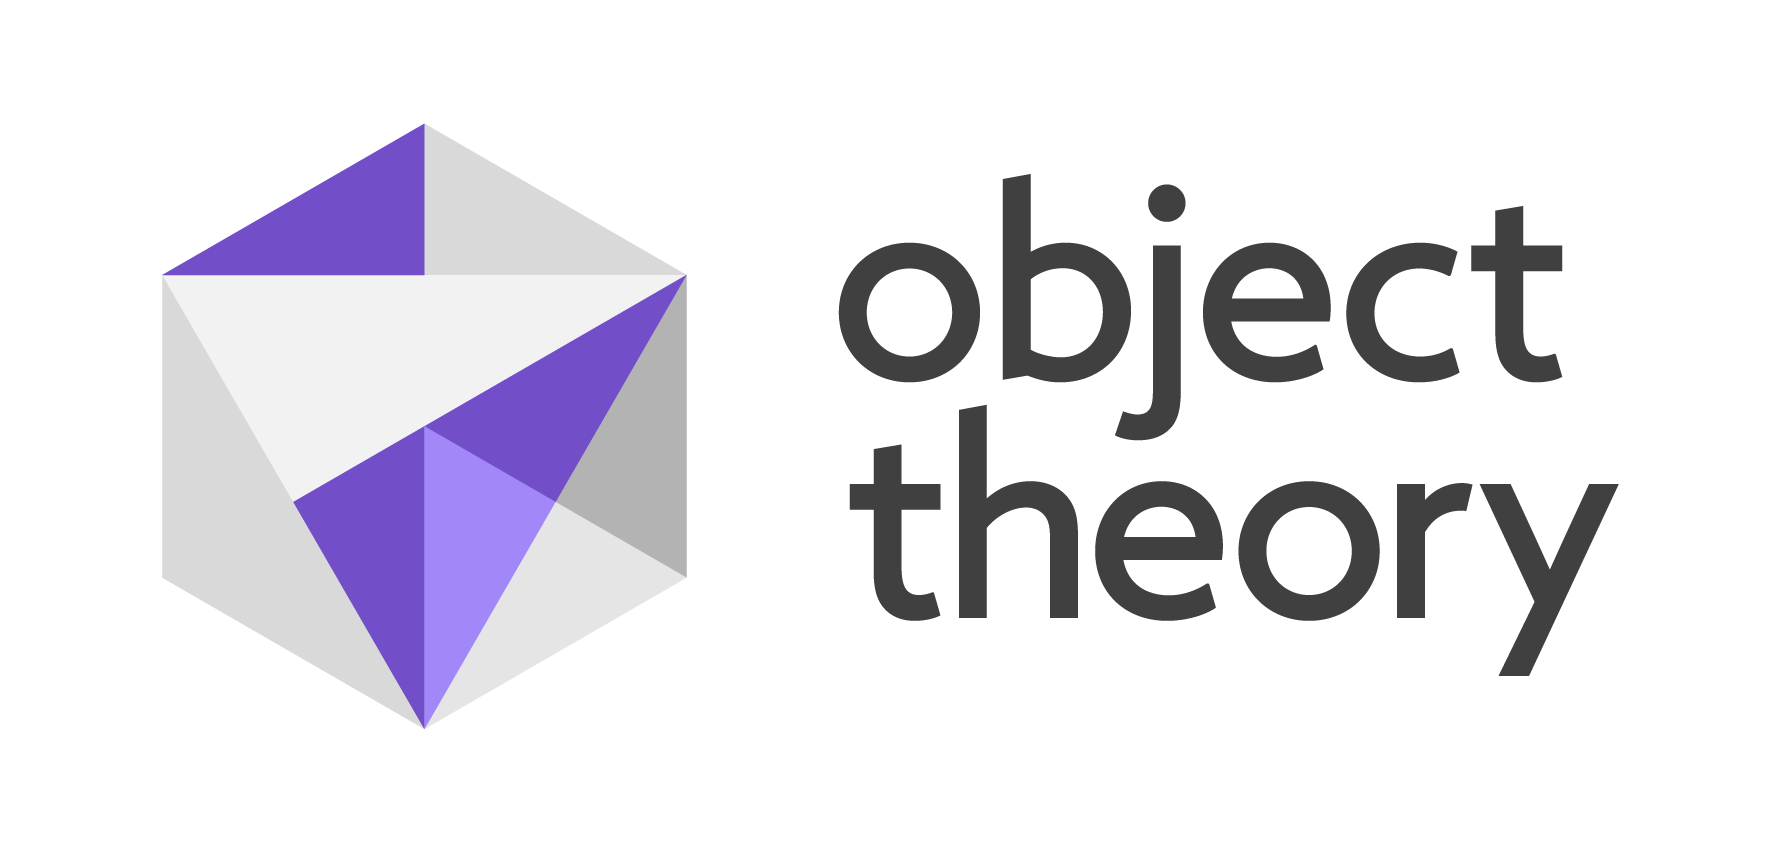 Object Logo - Object Theory